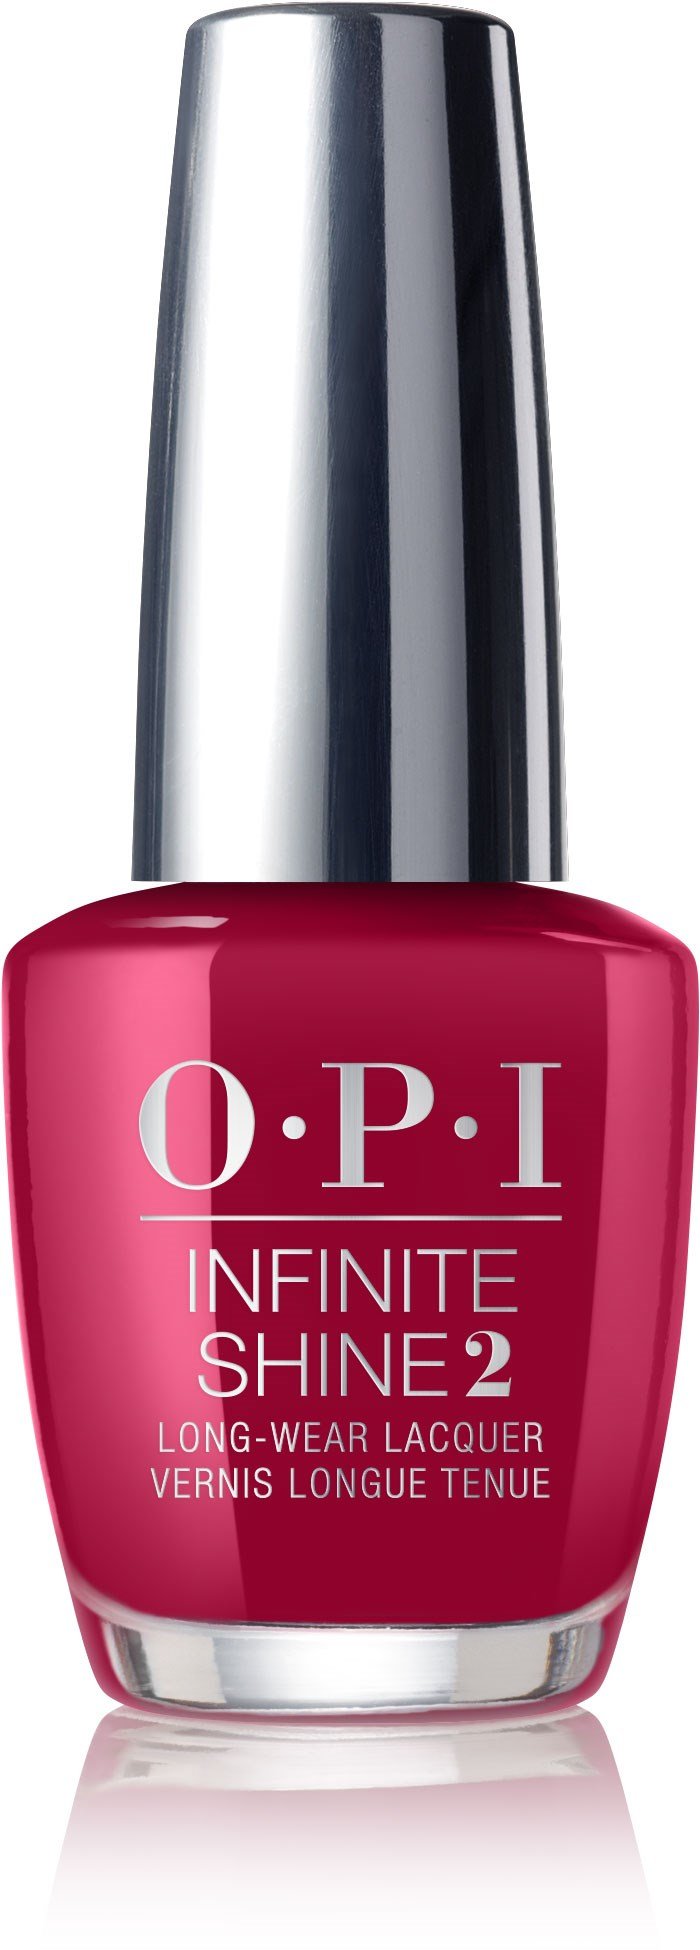 OPI Infinite Shine - OPI Red